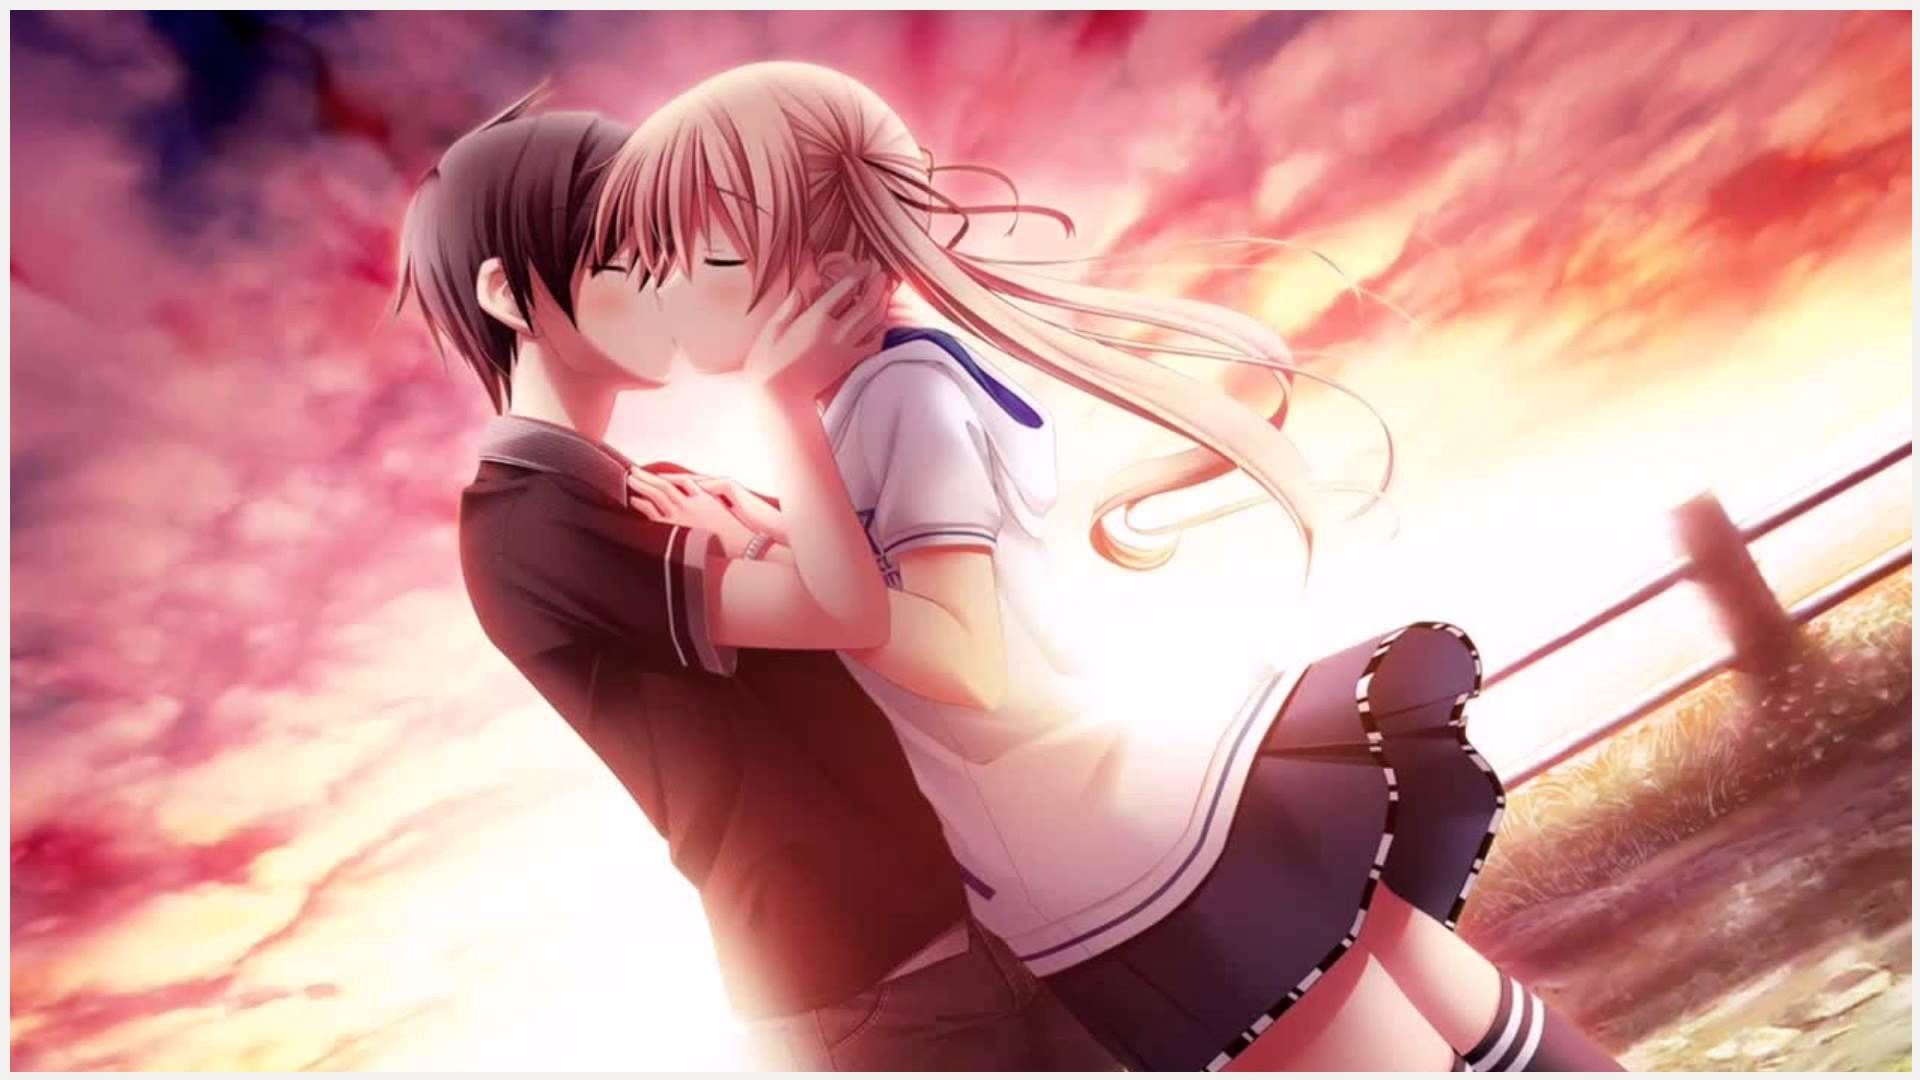 Love Kiss Of Cute Anime Couple Wallpaper Data Src Anime Couples Kissing